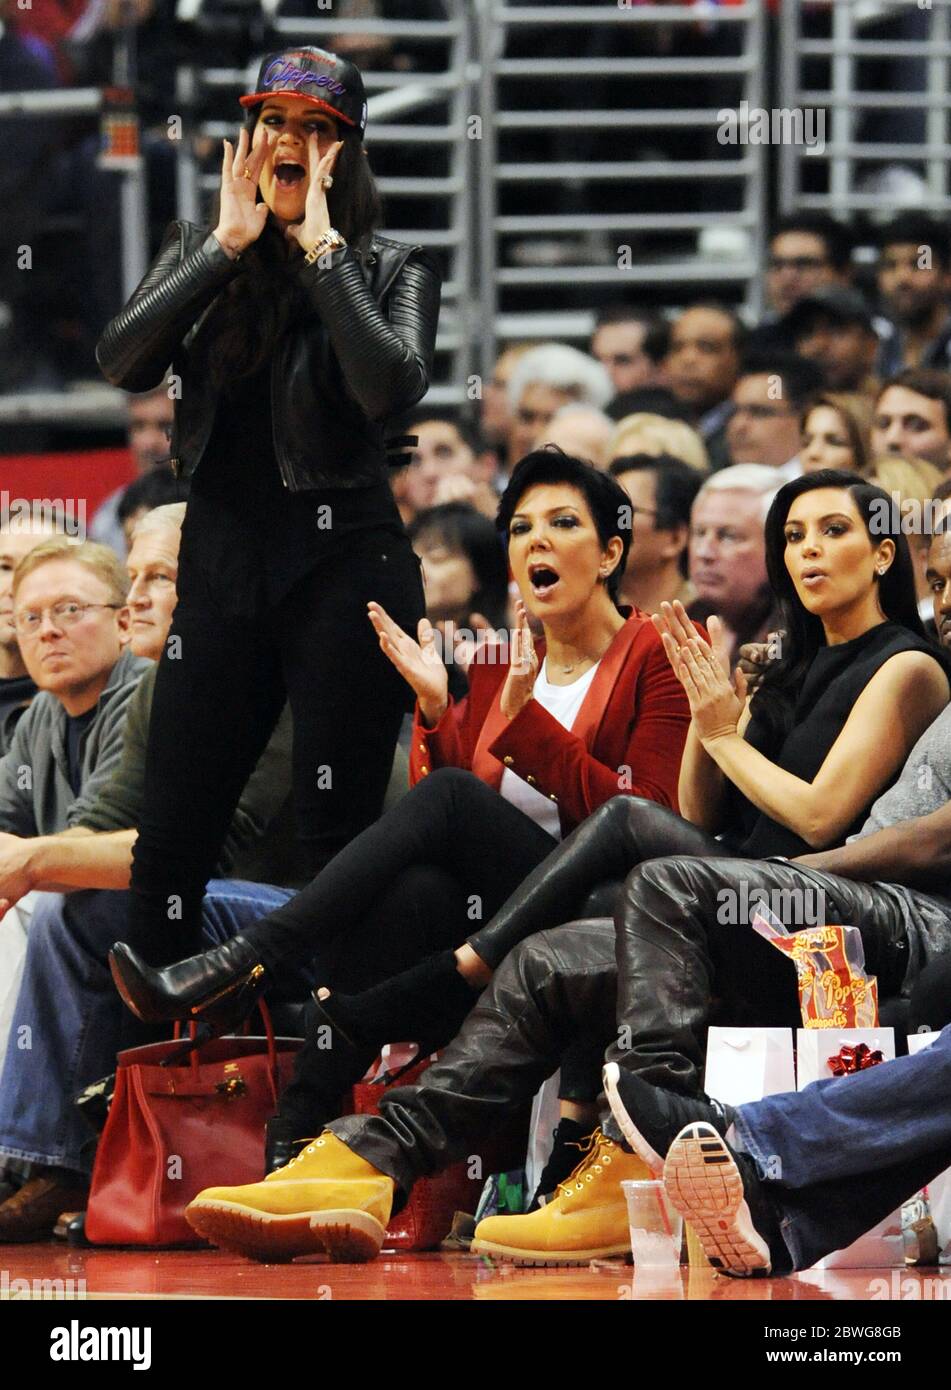 25. Dezember 2012 Kim Kardashian, Kanye West, Khloe Kardashian, Kris Jenner und Bruce Jenner sehen sich das NBA-Spiel LA Clippers gegen Denver Nuggets im Staples Center, Los Angeles, Kalifornien an. Quelle: Headlinephoto Los Angeles +1 (818) 641-7413 photos@headlinephoto.co.uk http://www.headlinephoto.co.uk Stockfoto